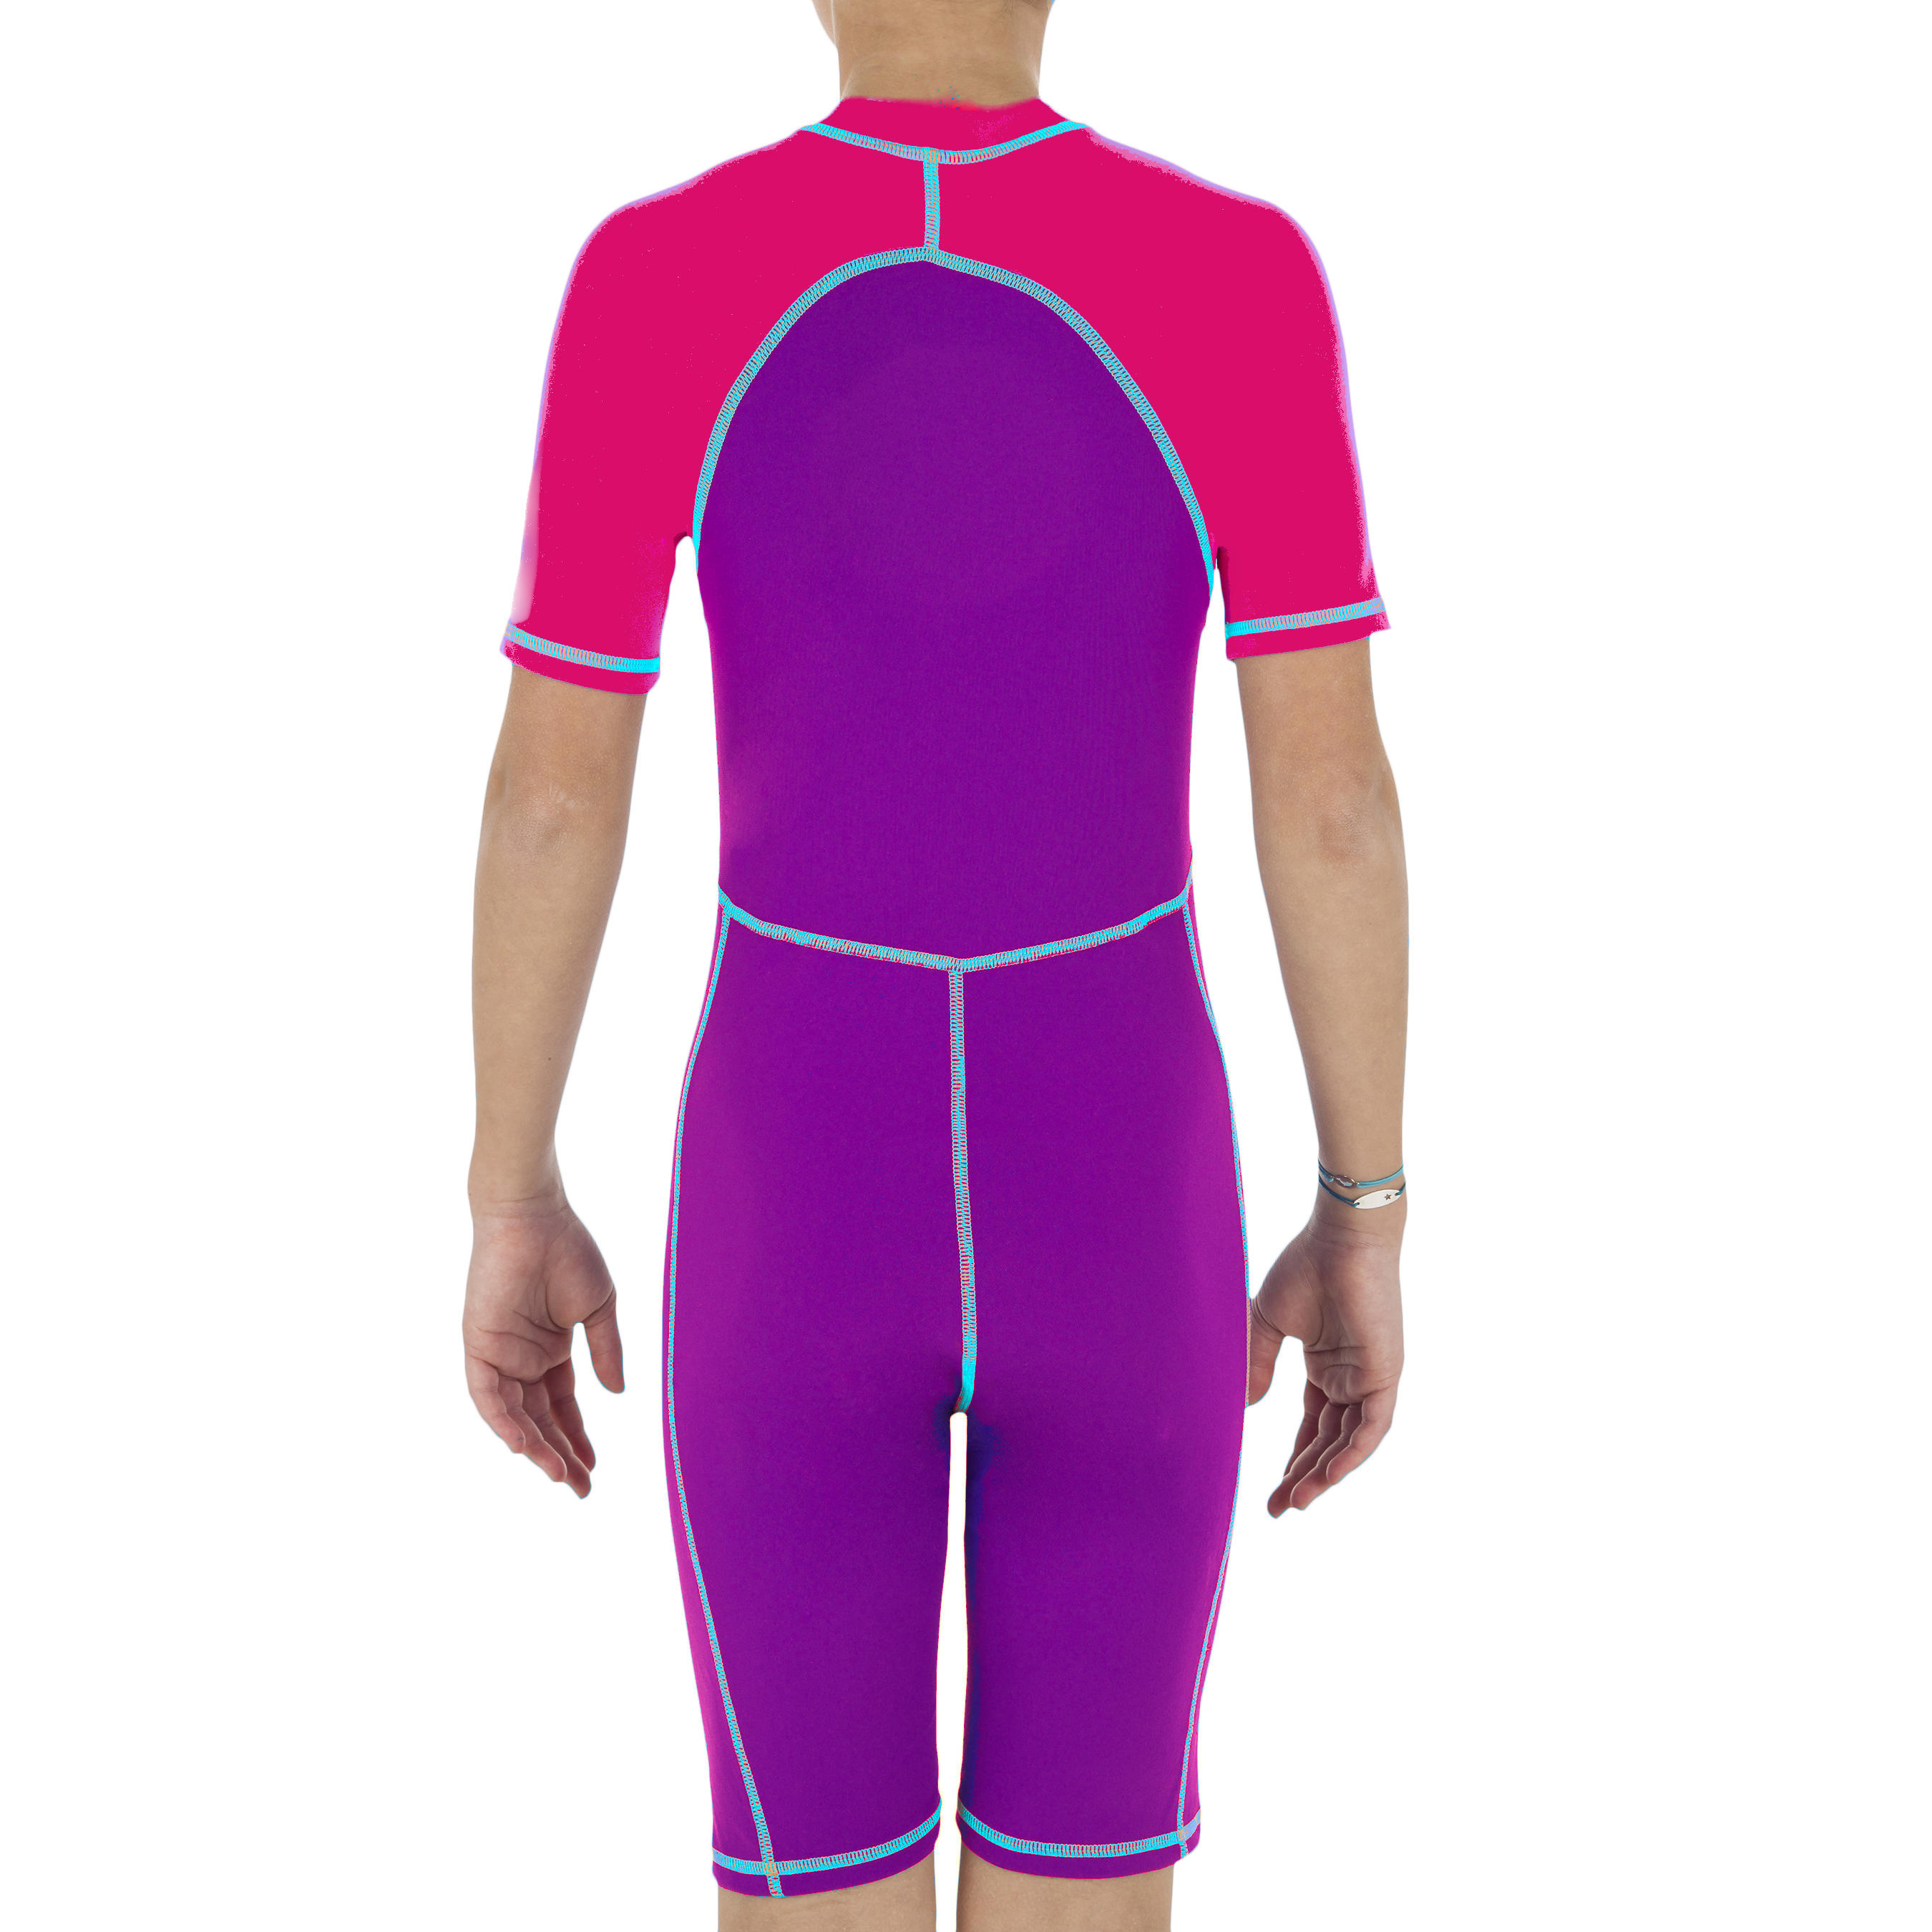 Shorty 100 Girls' Swimming Suit - Pink Purple 2/3